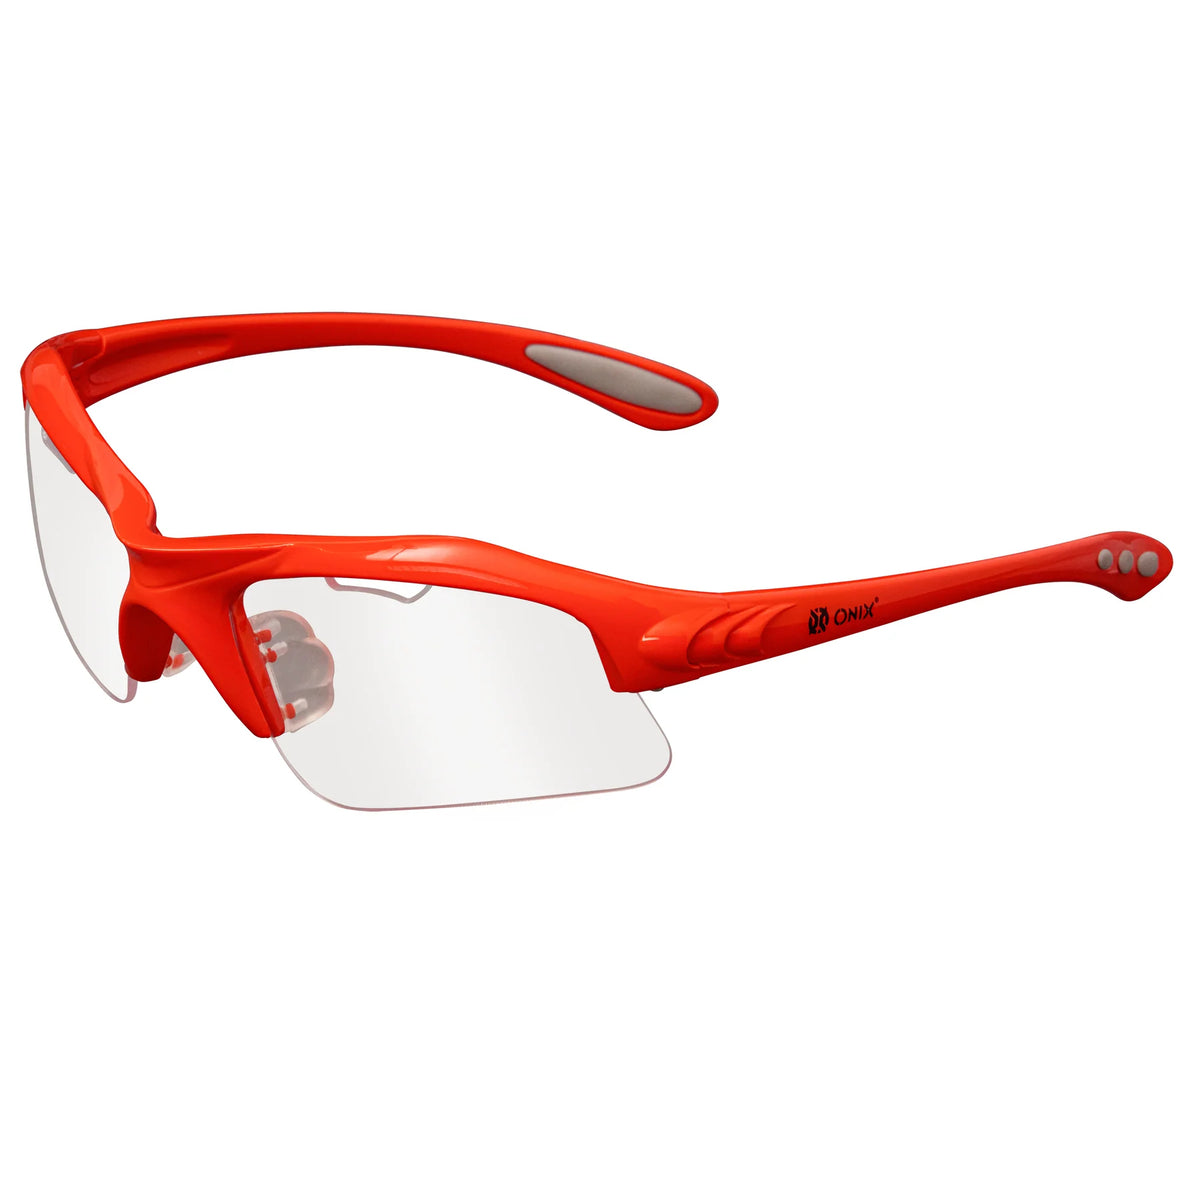 ONIX - EAGLE EYEWEAR - Three Lens - Protective Sports Glasses